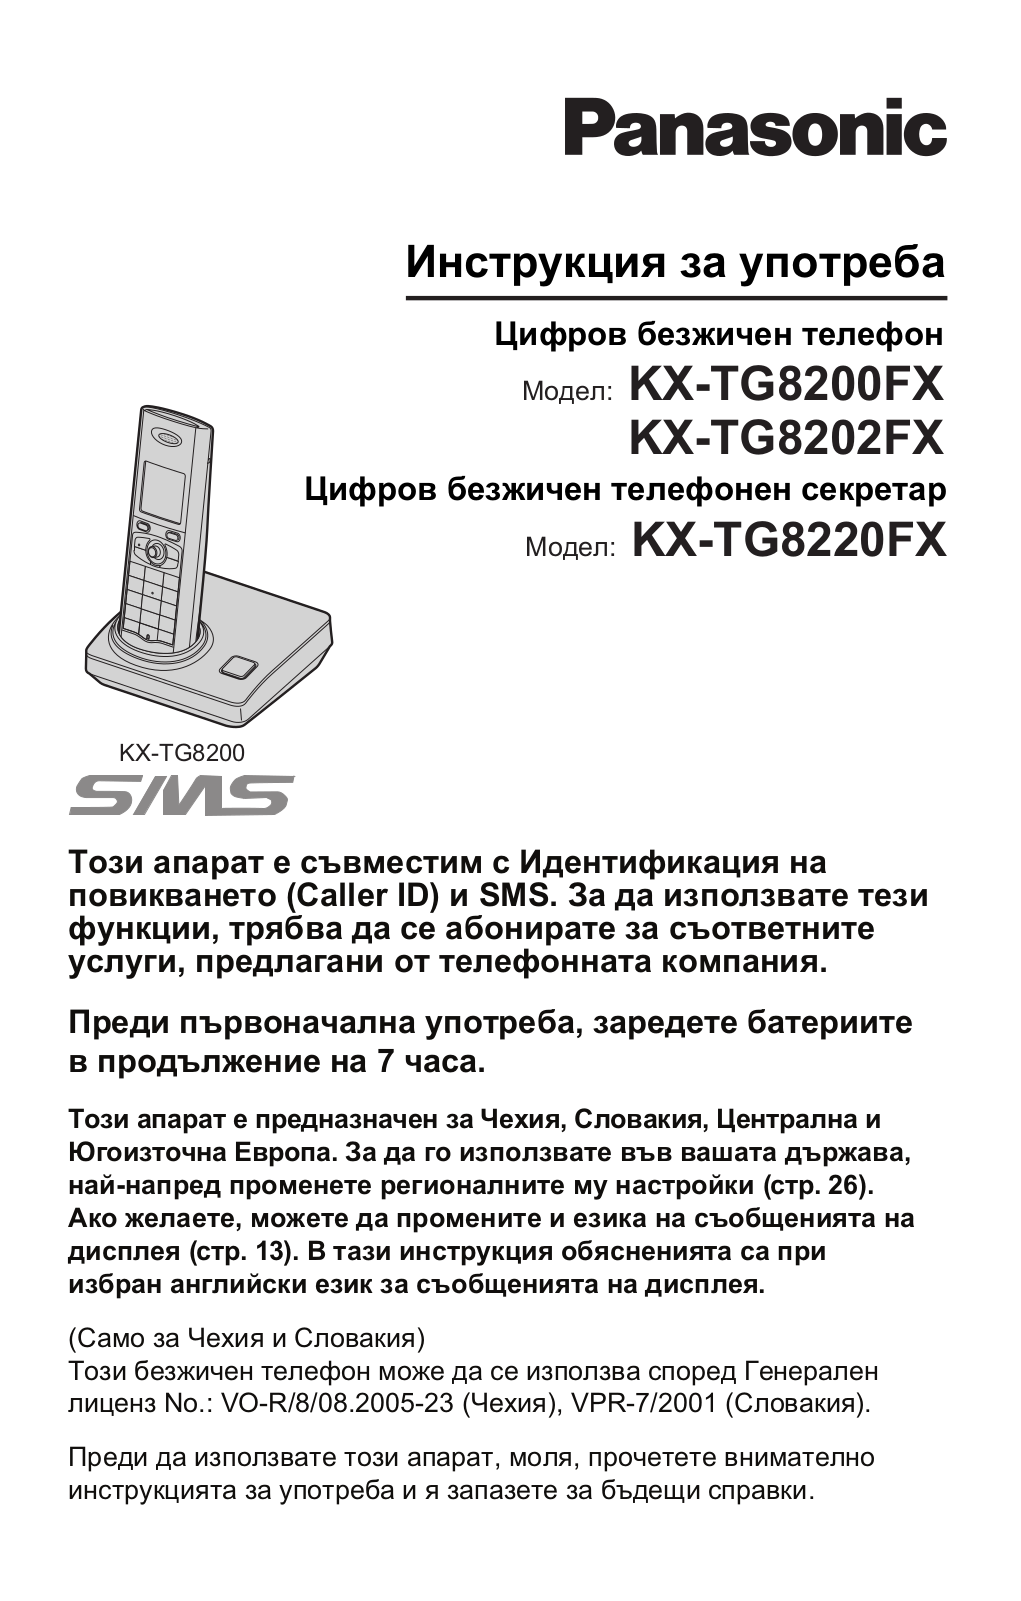 Panasonic KX-TG8200FX, KX-TG8202FX, KX-TG8220FX User Manual